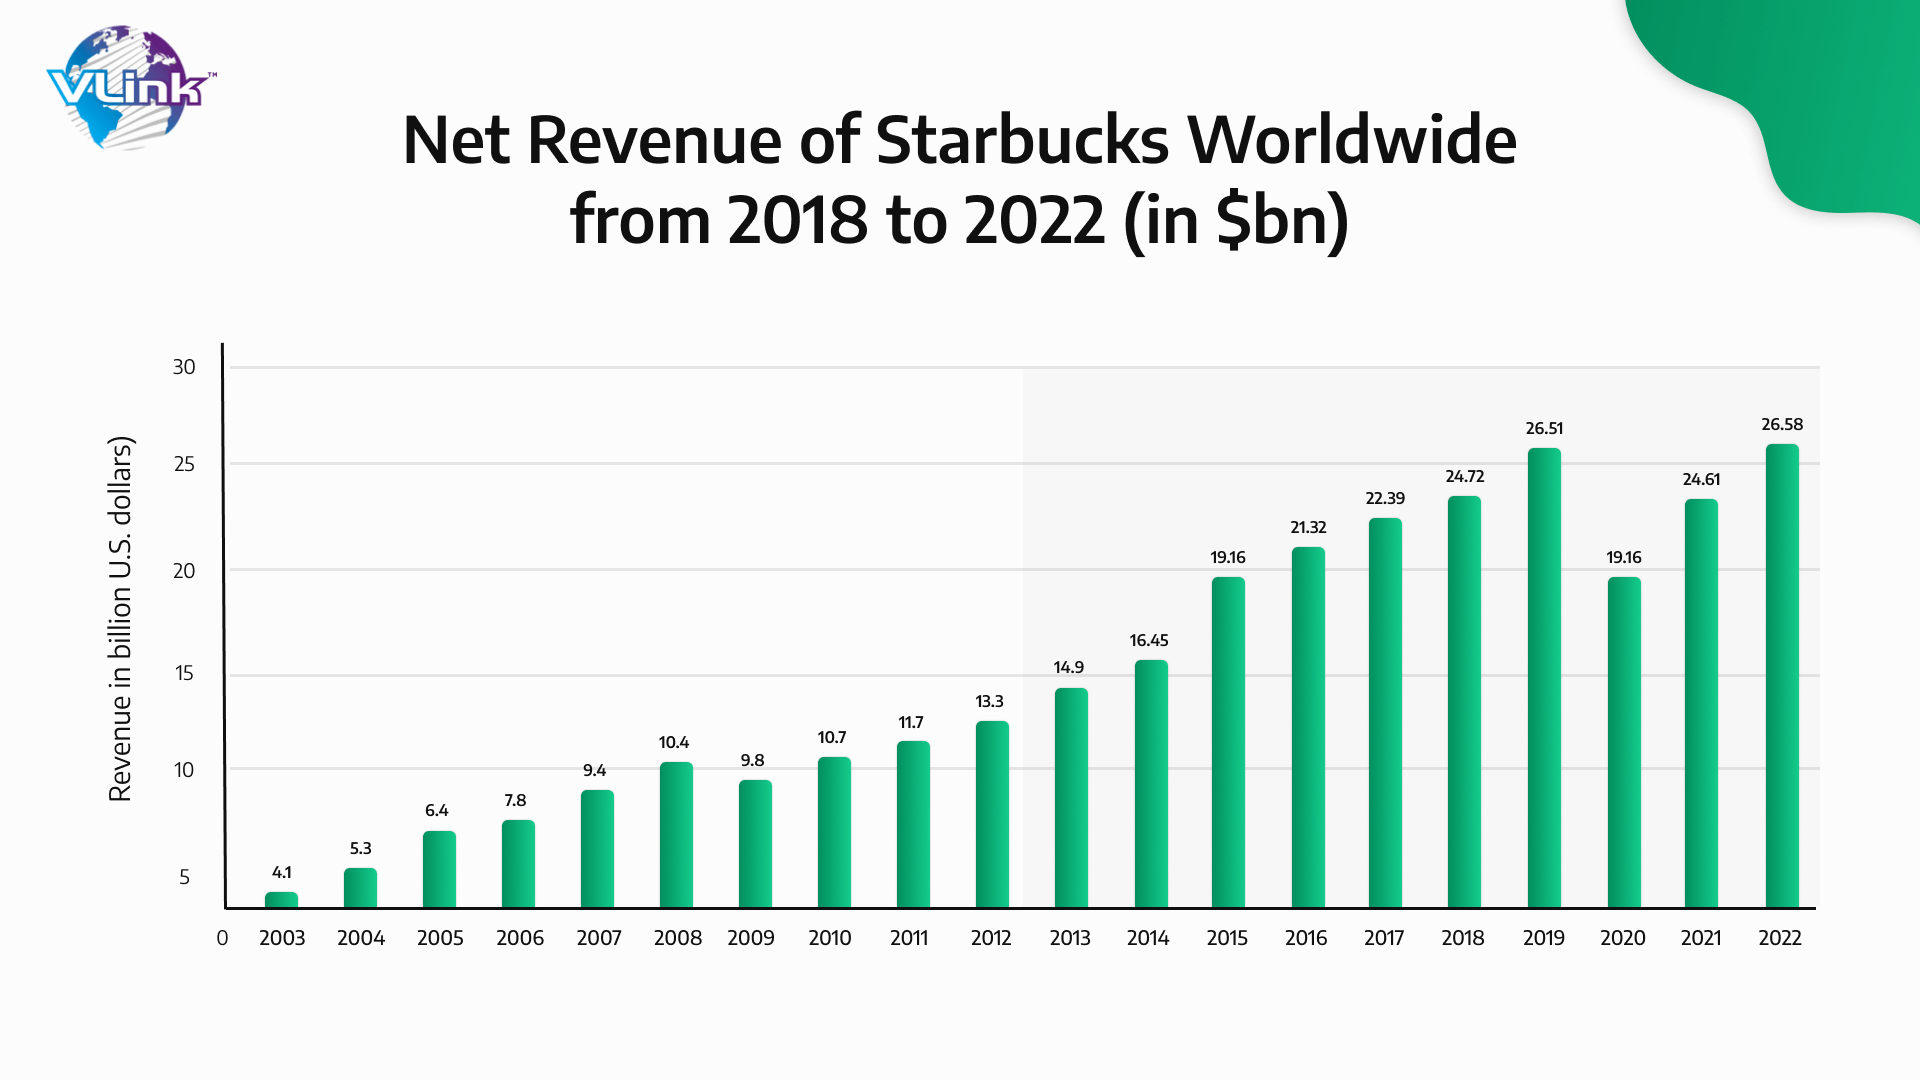 Net Revenue of starbucks worldwide from 2018 to 2022